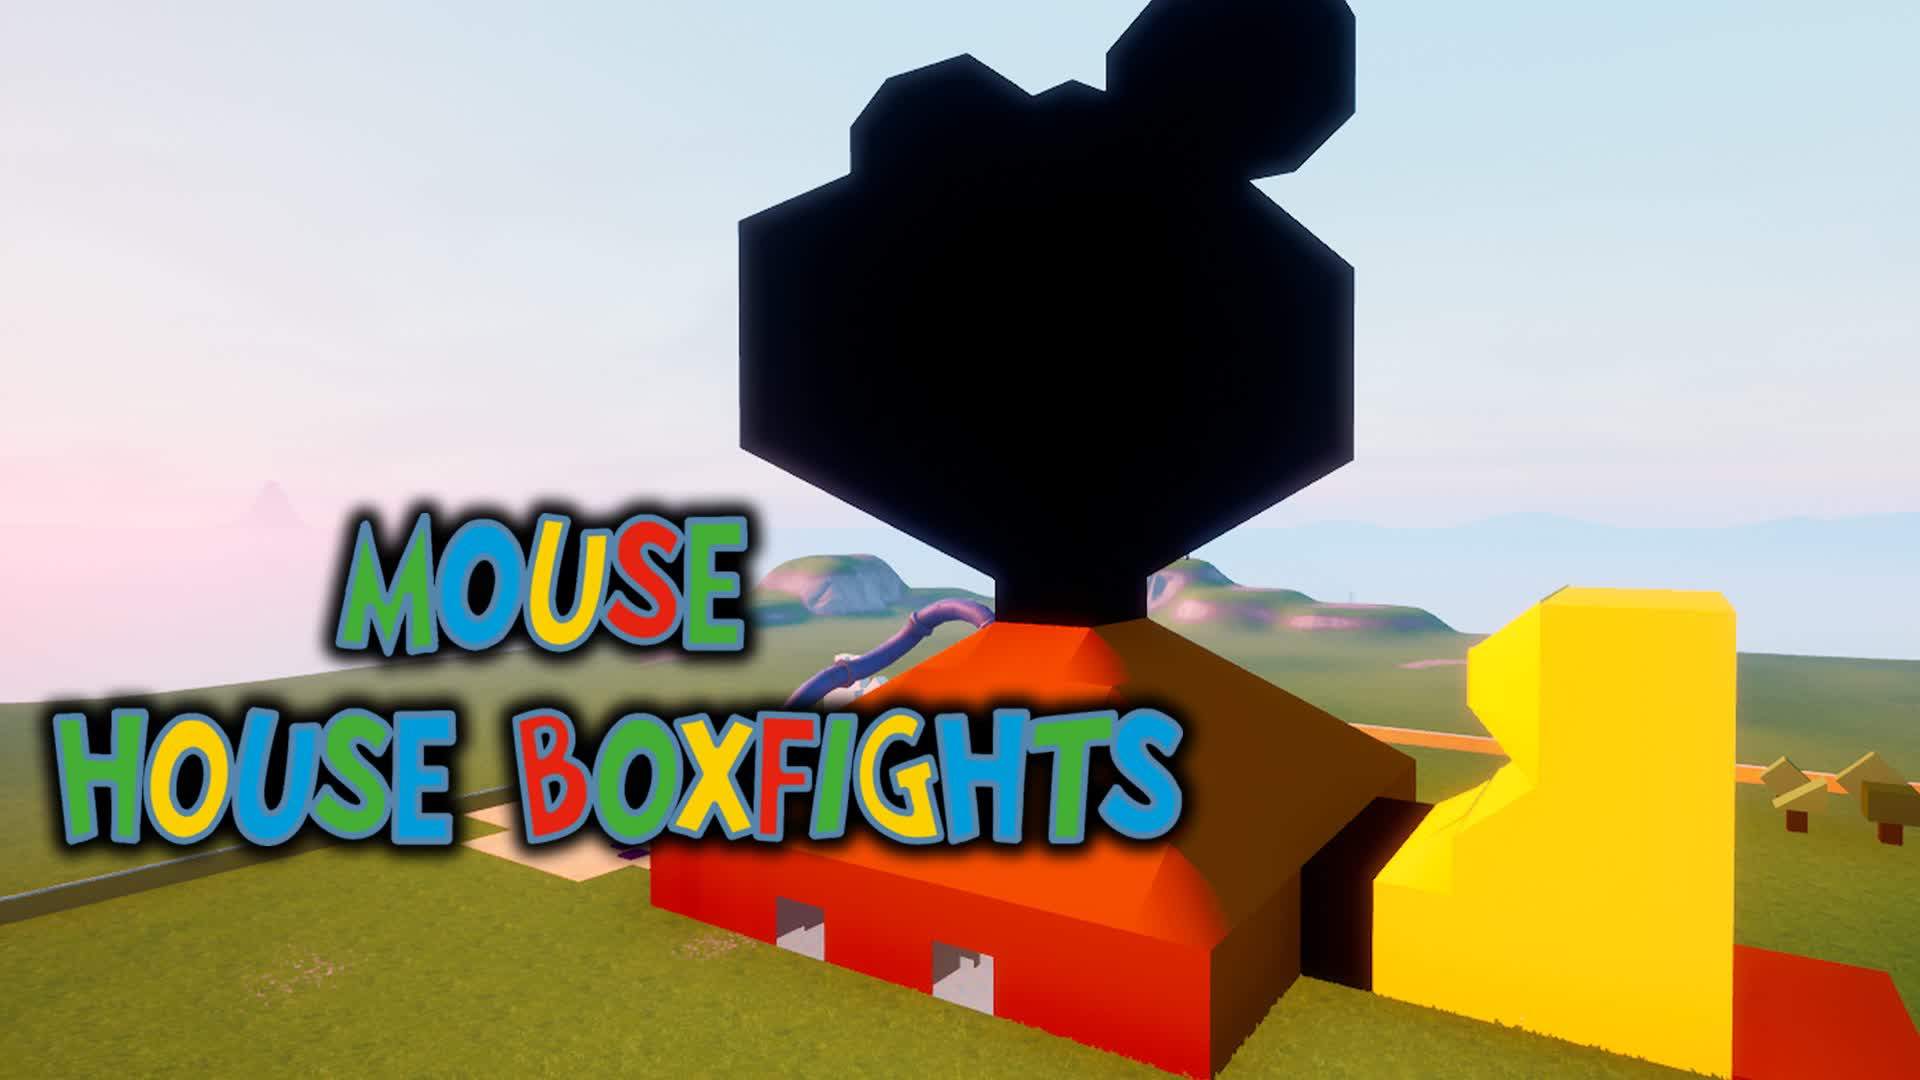 MOUSE HOUSE BOXFIGHTS